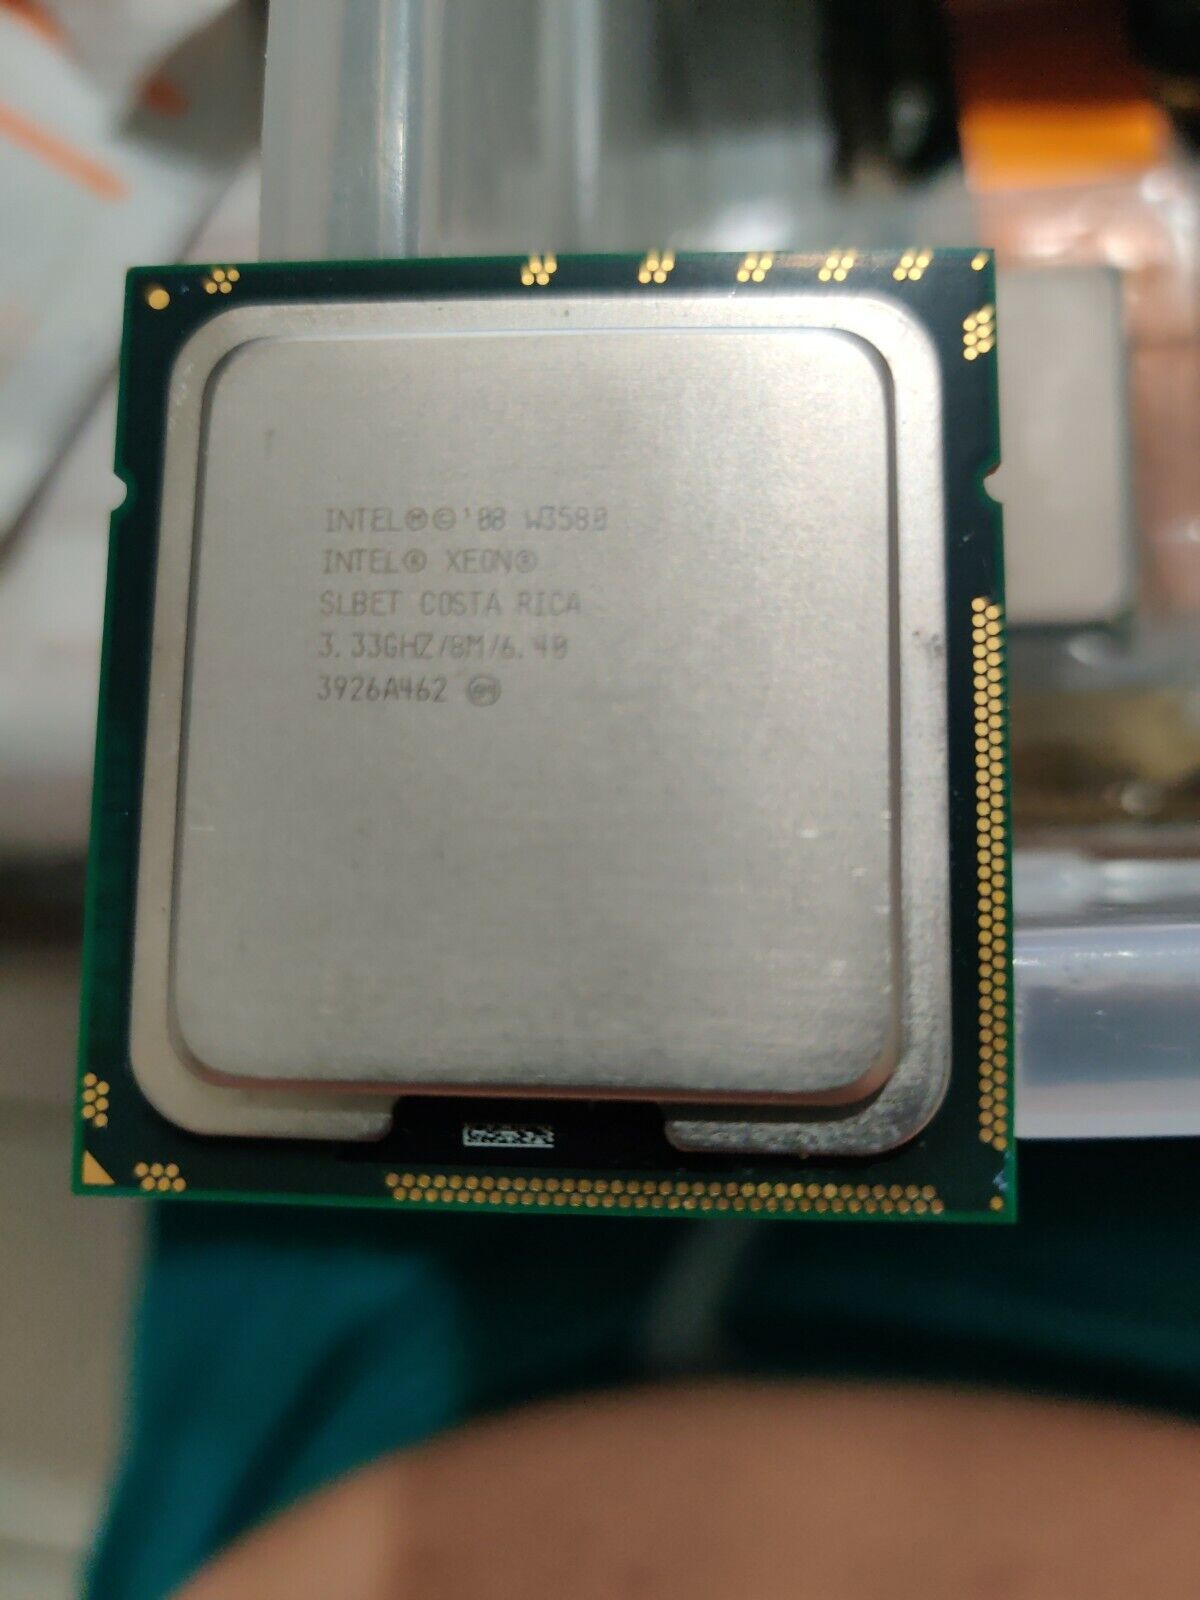 Intel Xeon W3580 SLBET 3.33GHz 8M Quad Core LGA 1366 Server CPU Processor 130W